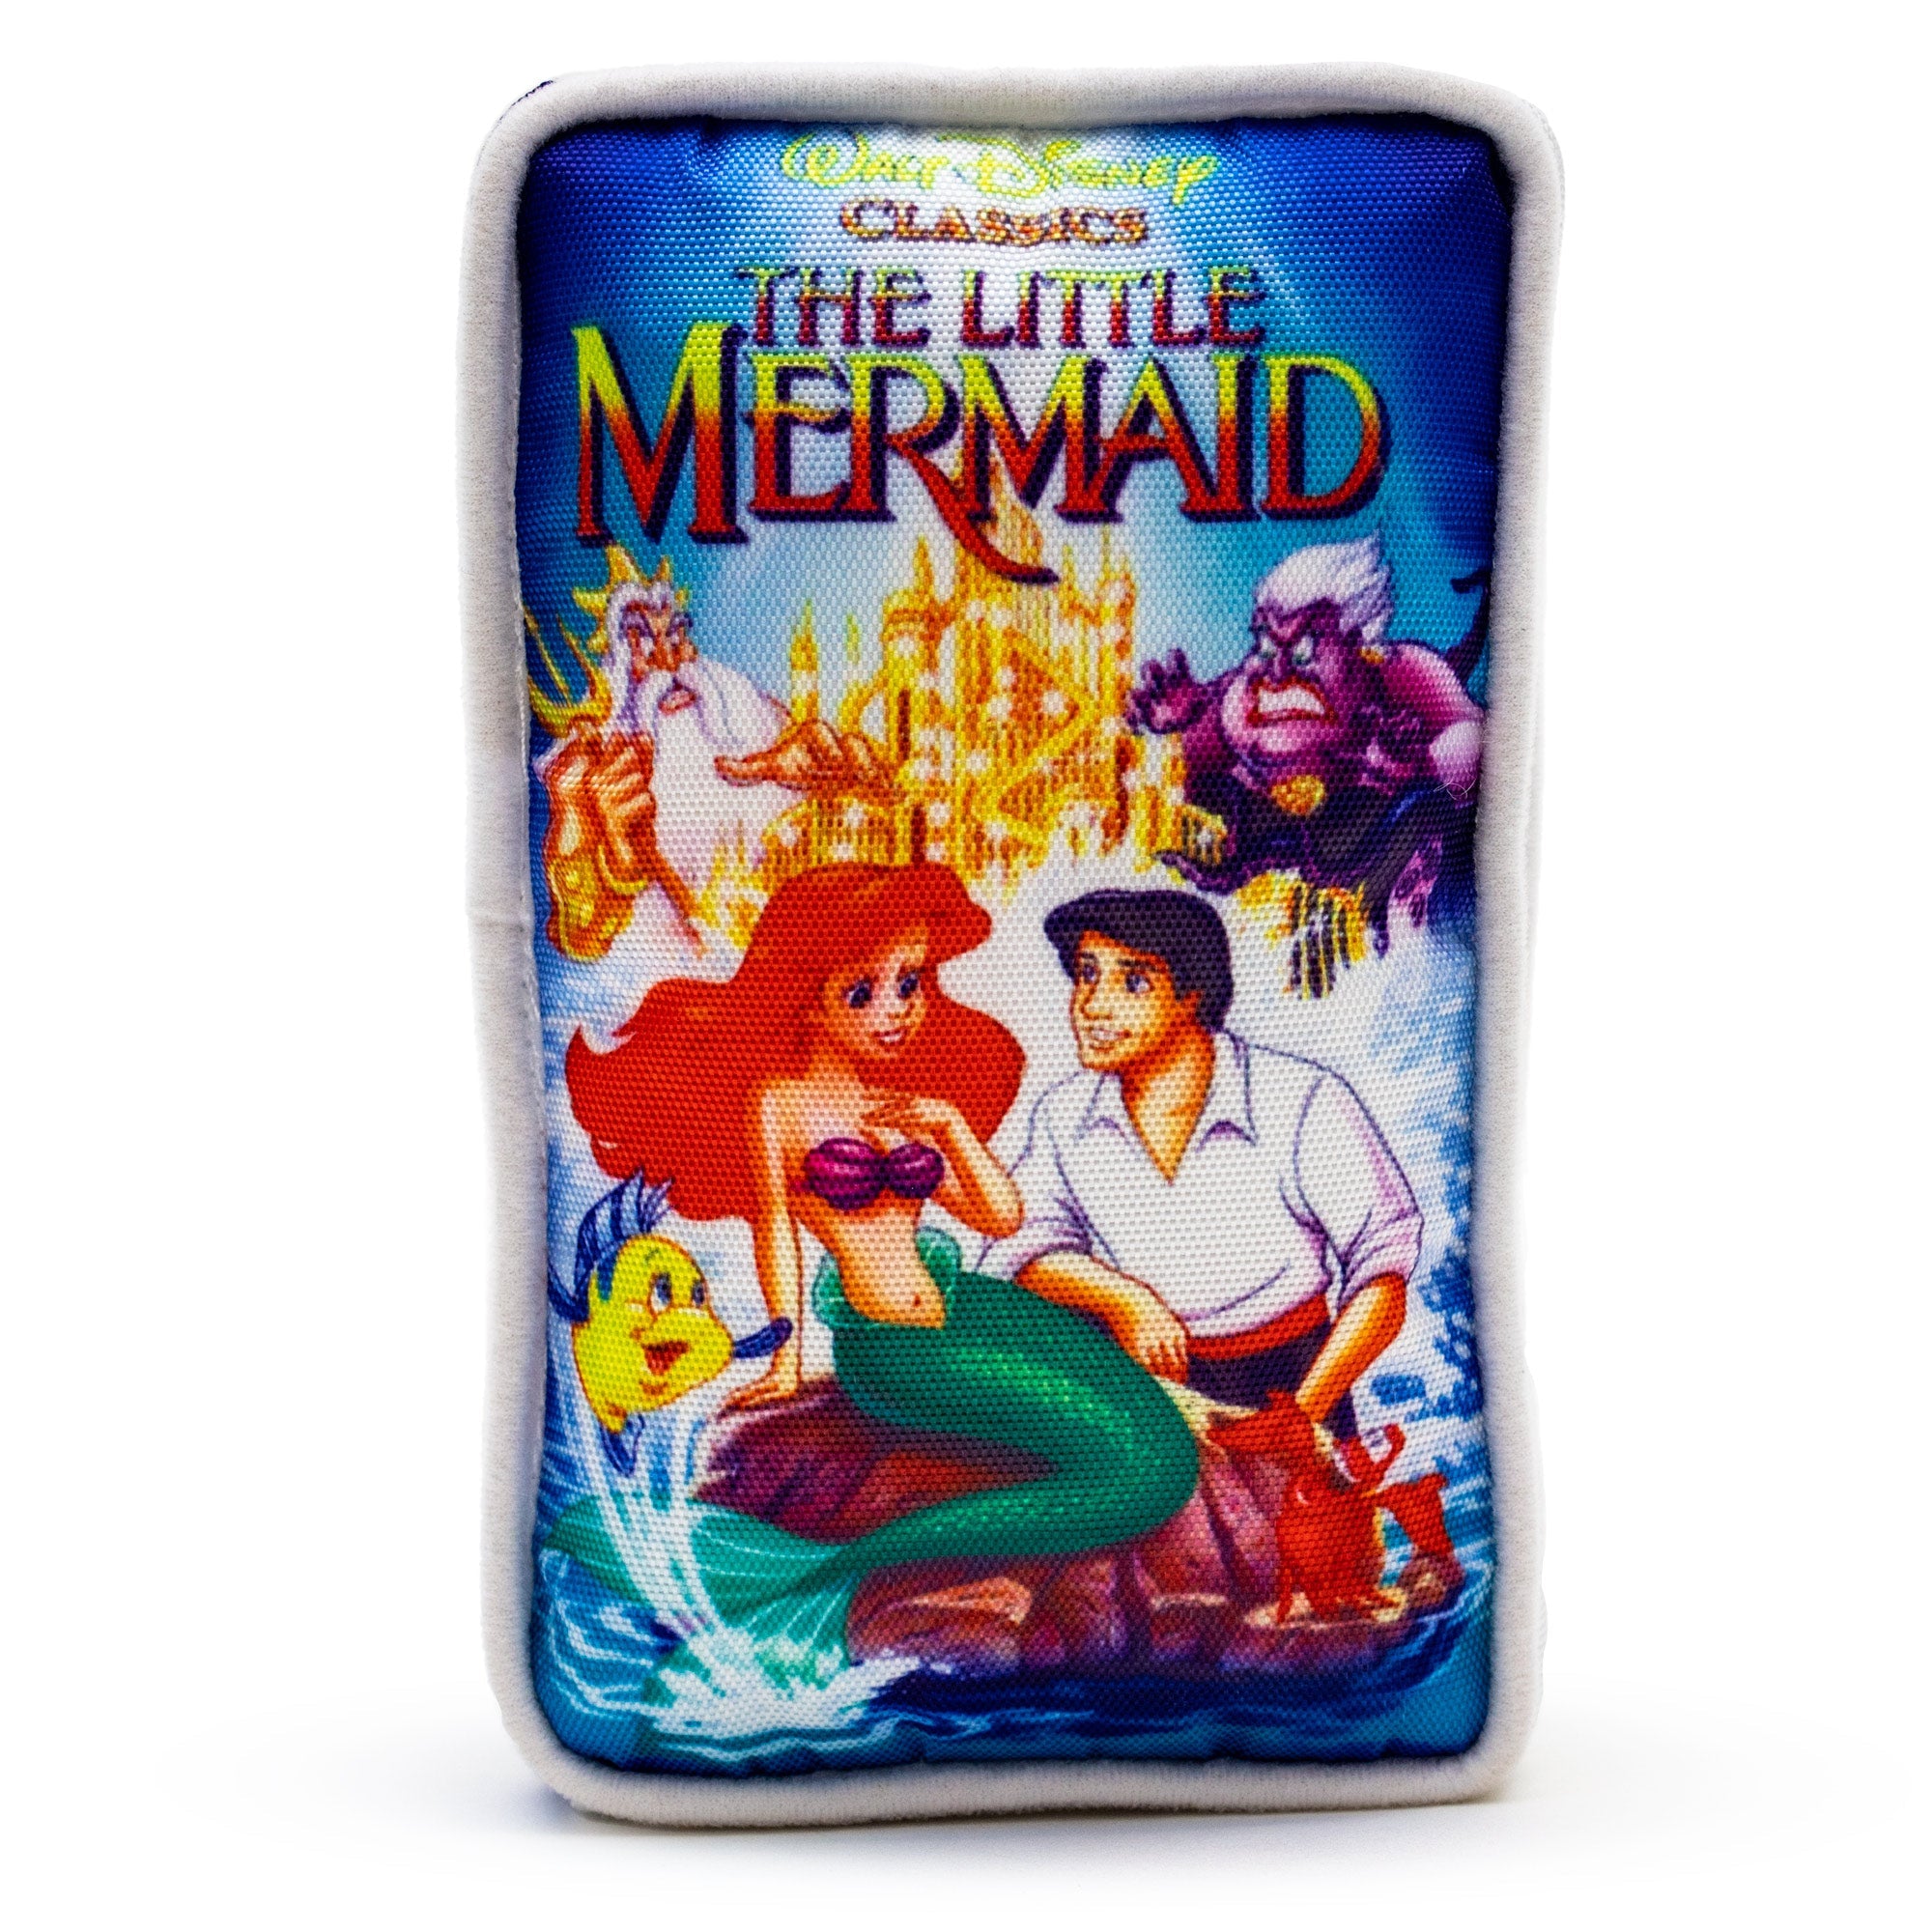 Disney The Little Mermaid VHS Tape Replica Plush Squeaker Dog Toy